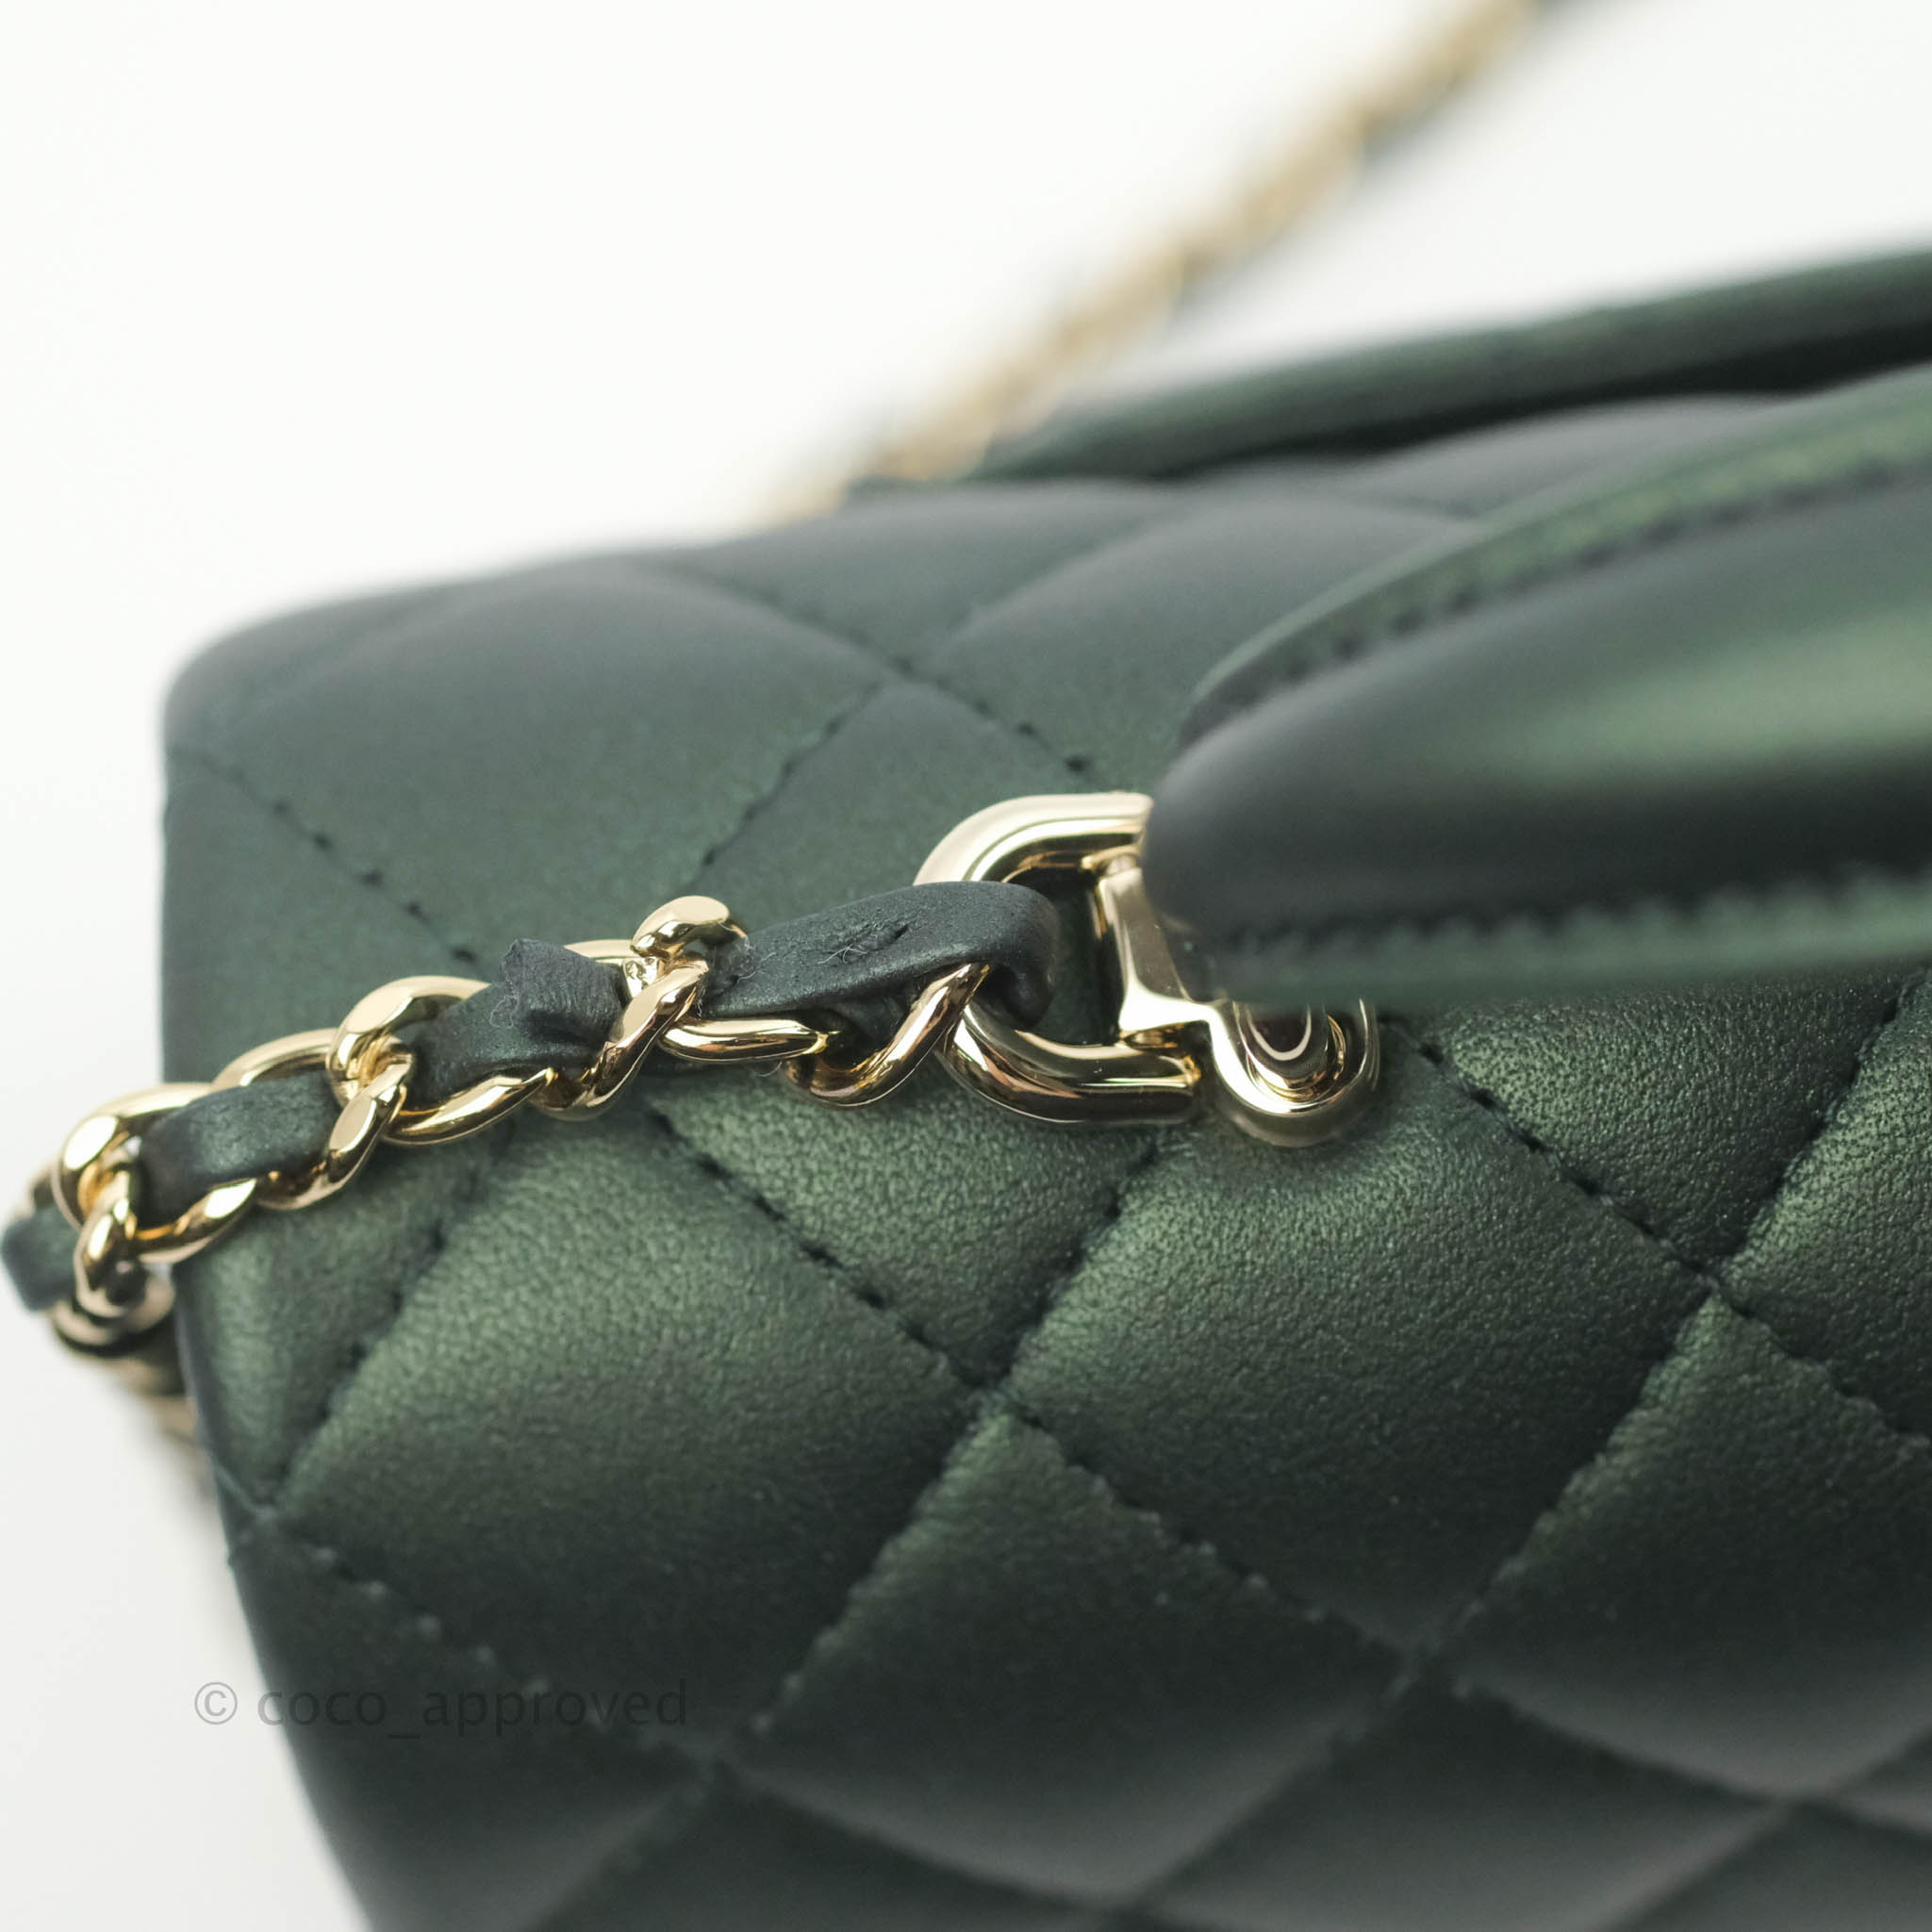 Chanel Top Handle Mini Rectangular Flap Bag Iridescent Green